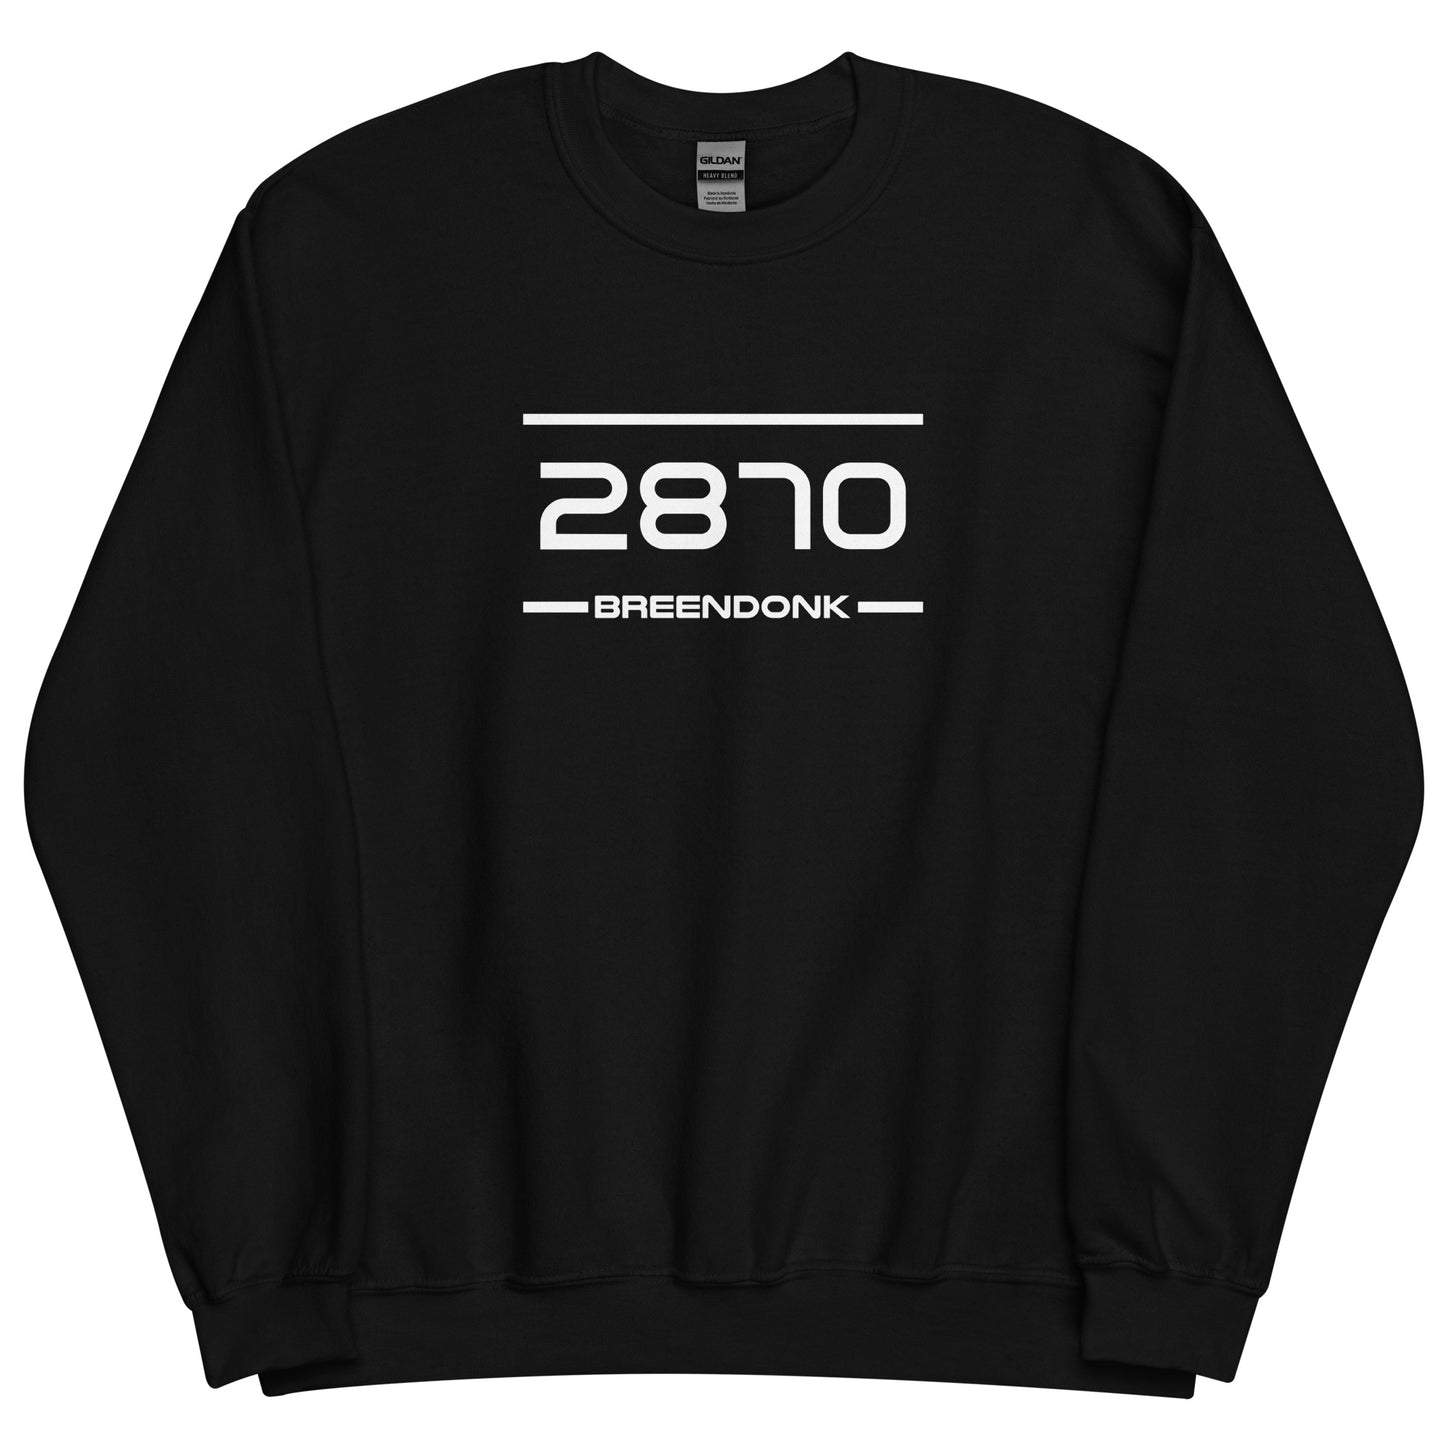 Sweater - 2870 - Breendonk (M/V)